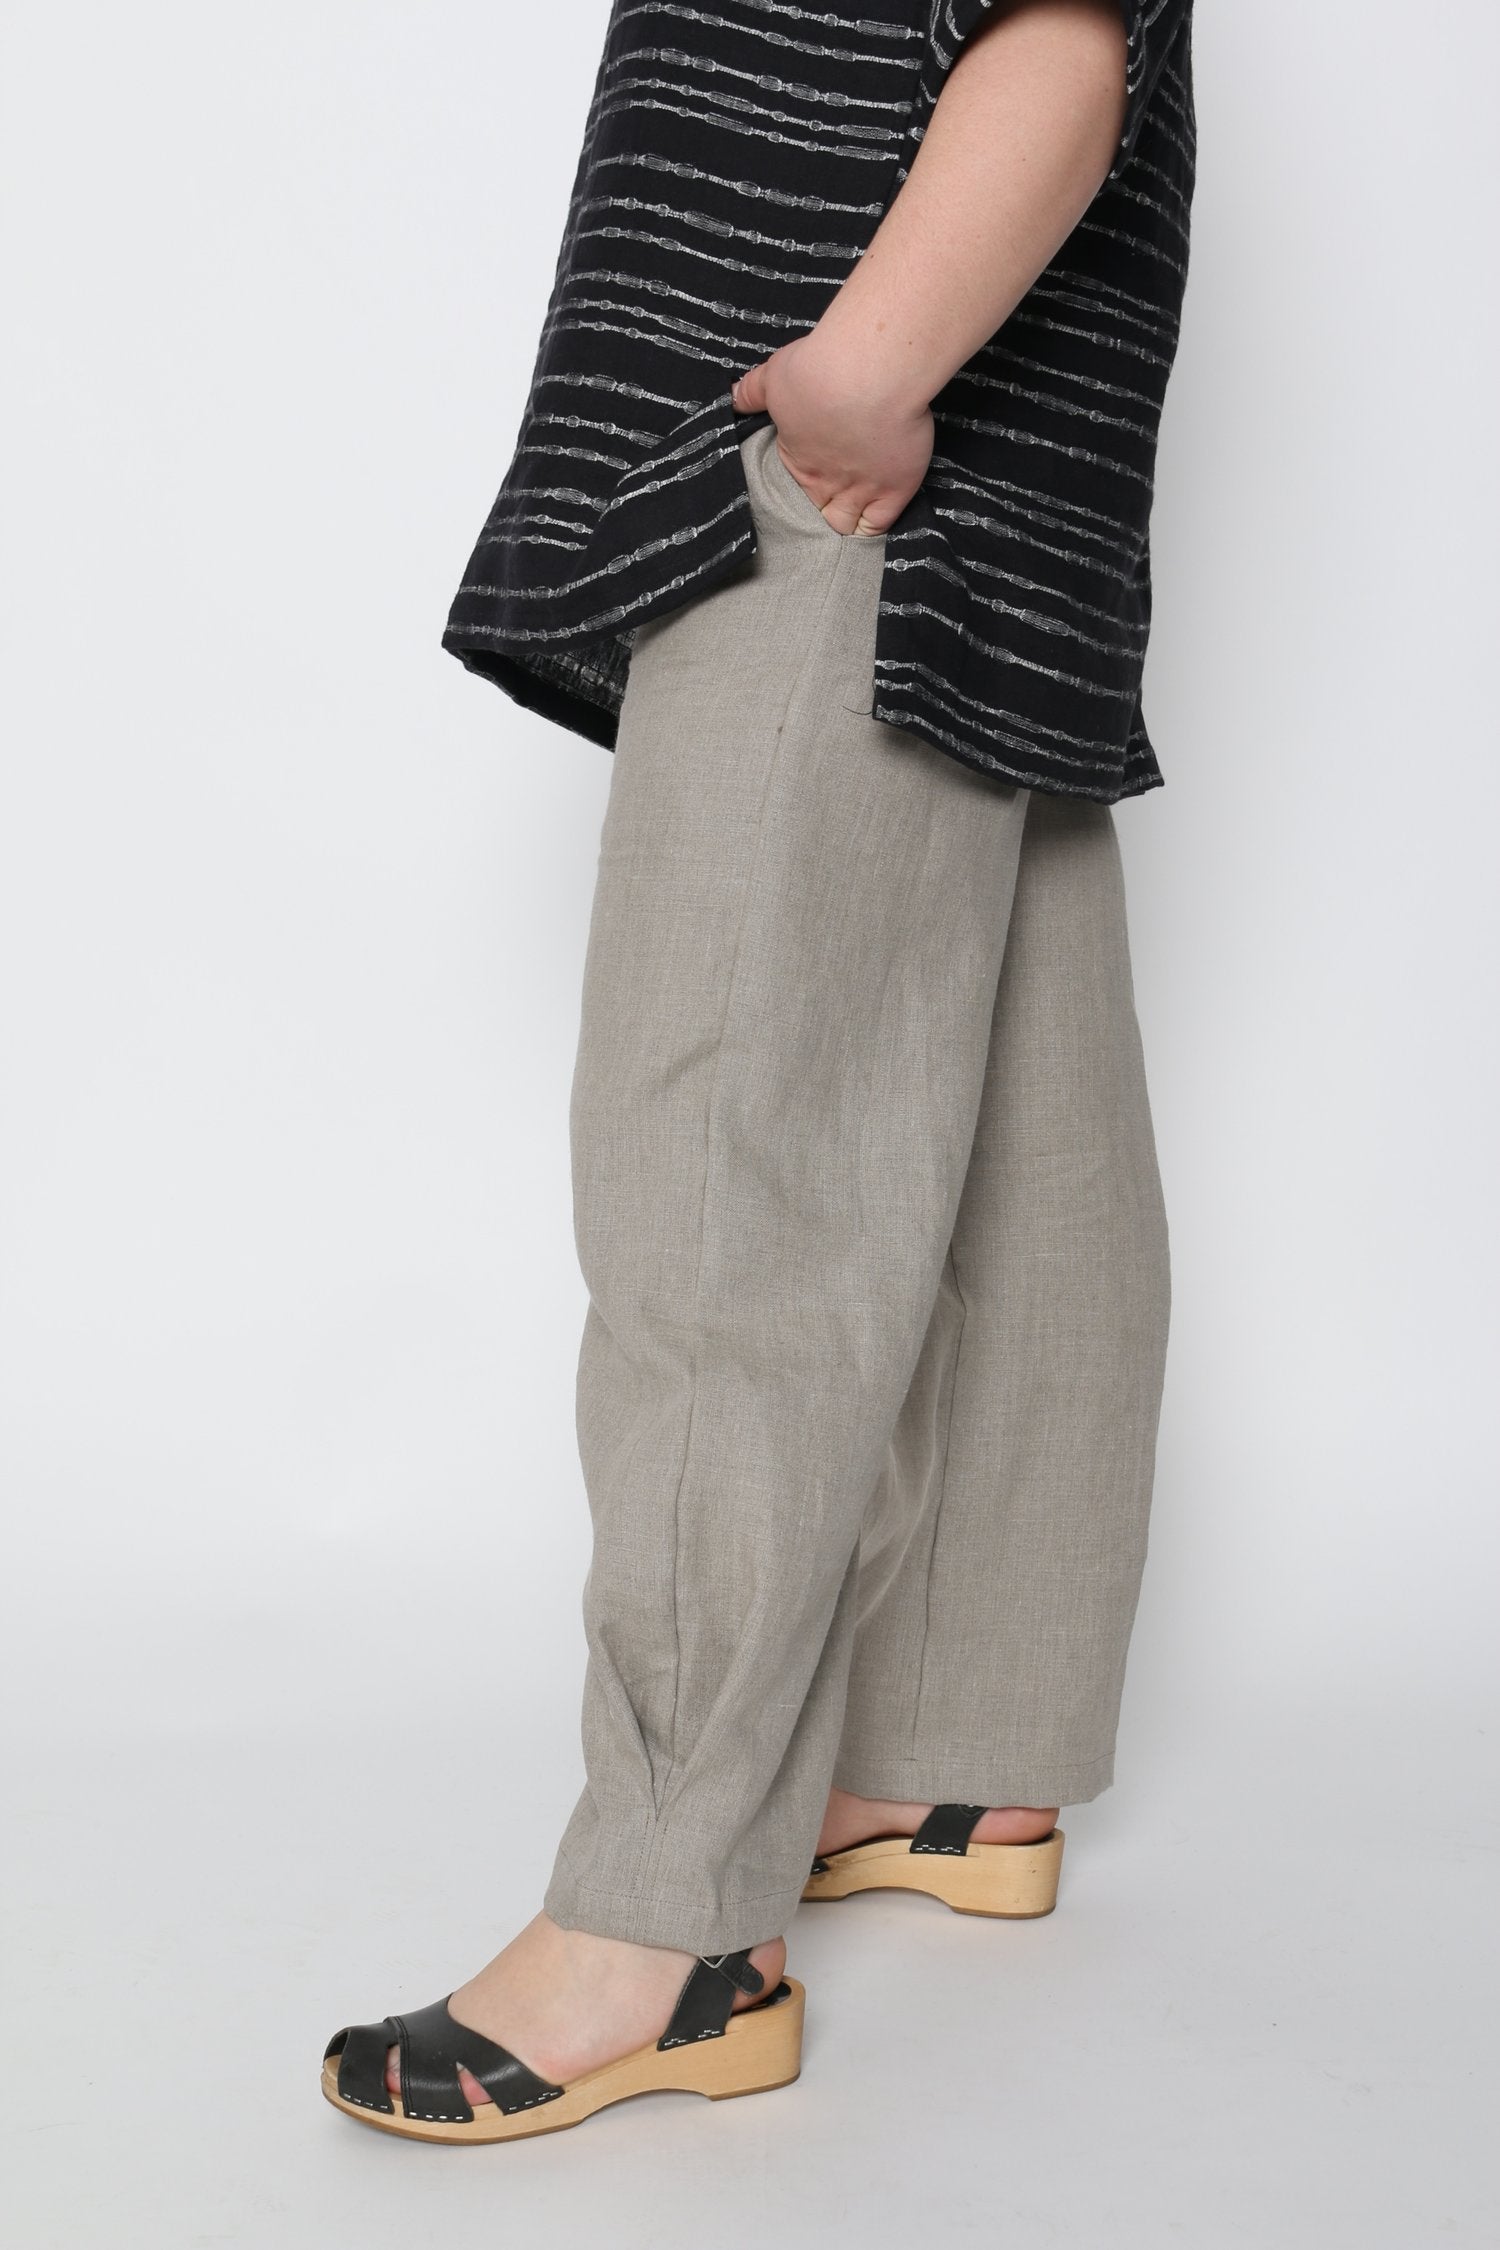 Conscious Clothing Cotton Linen Crescent Moon Pants - Pebble – Terra  Shepherd Boutique & Apothecary